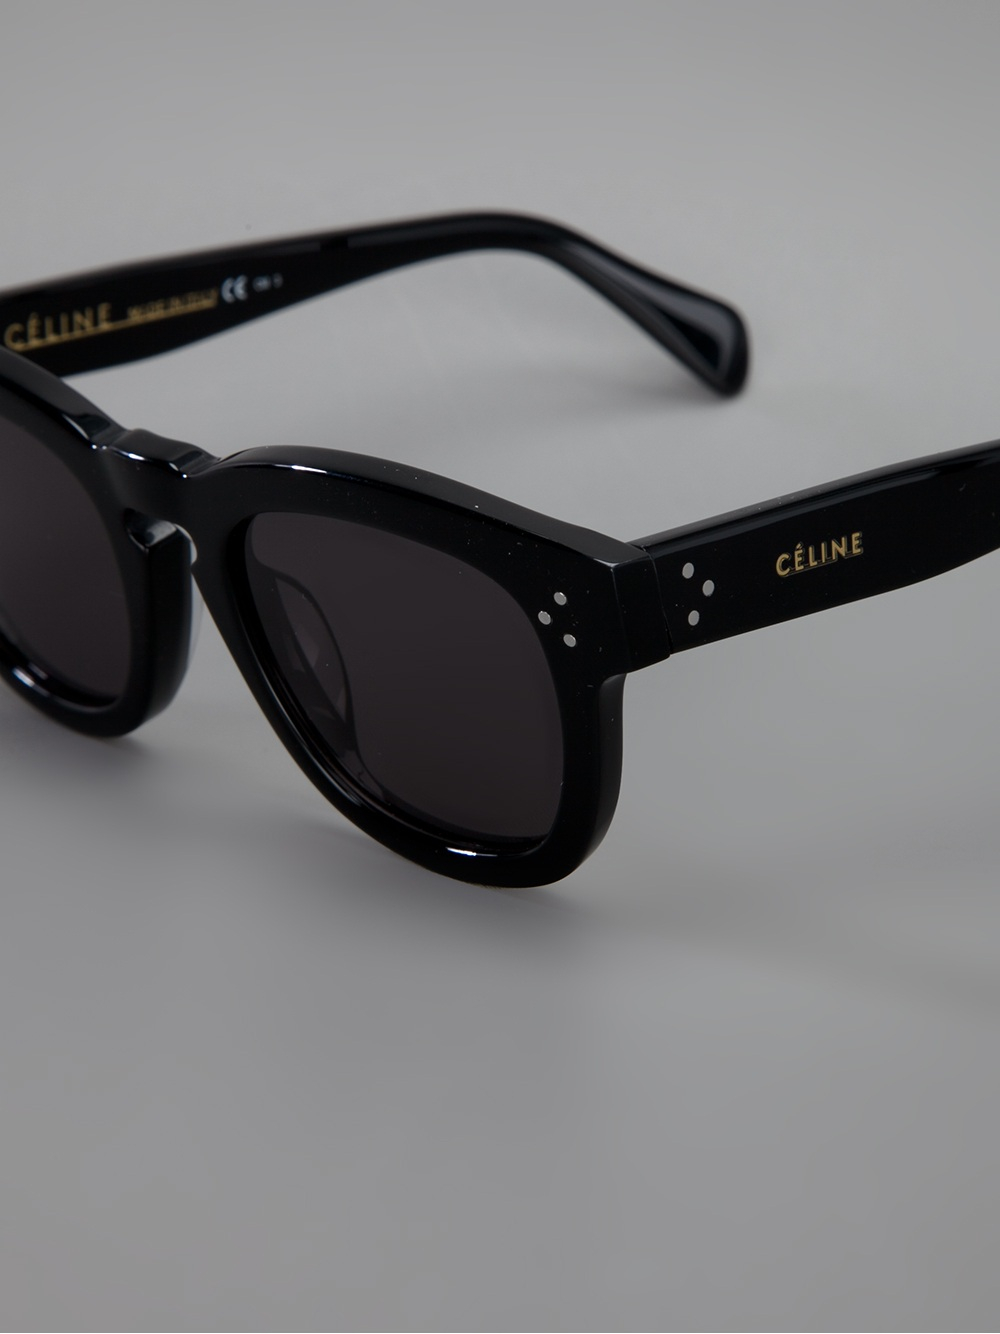 Céline Tailor Sunglasses in Black - Lyst